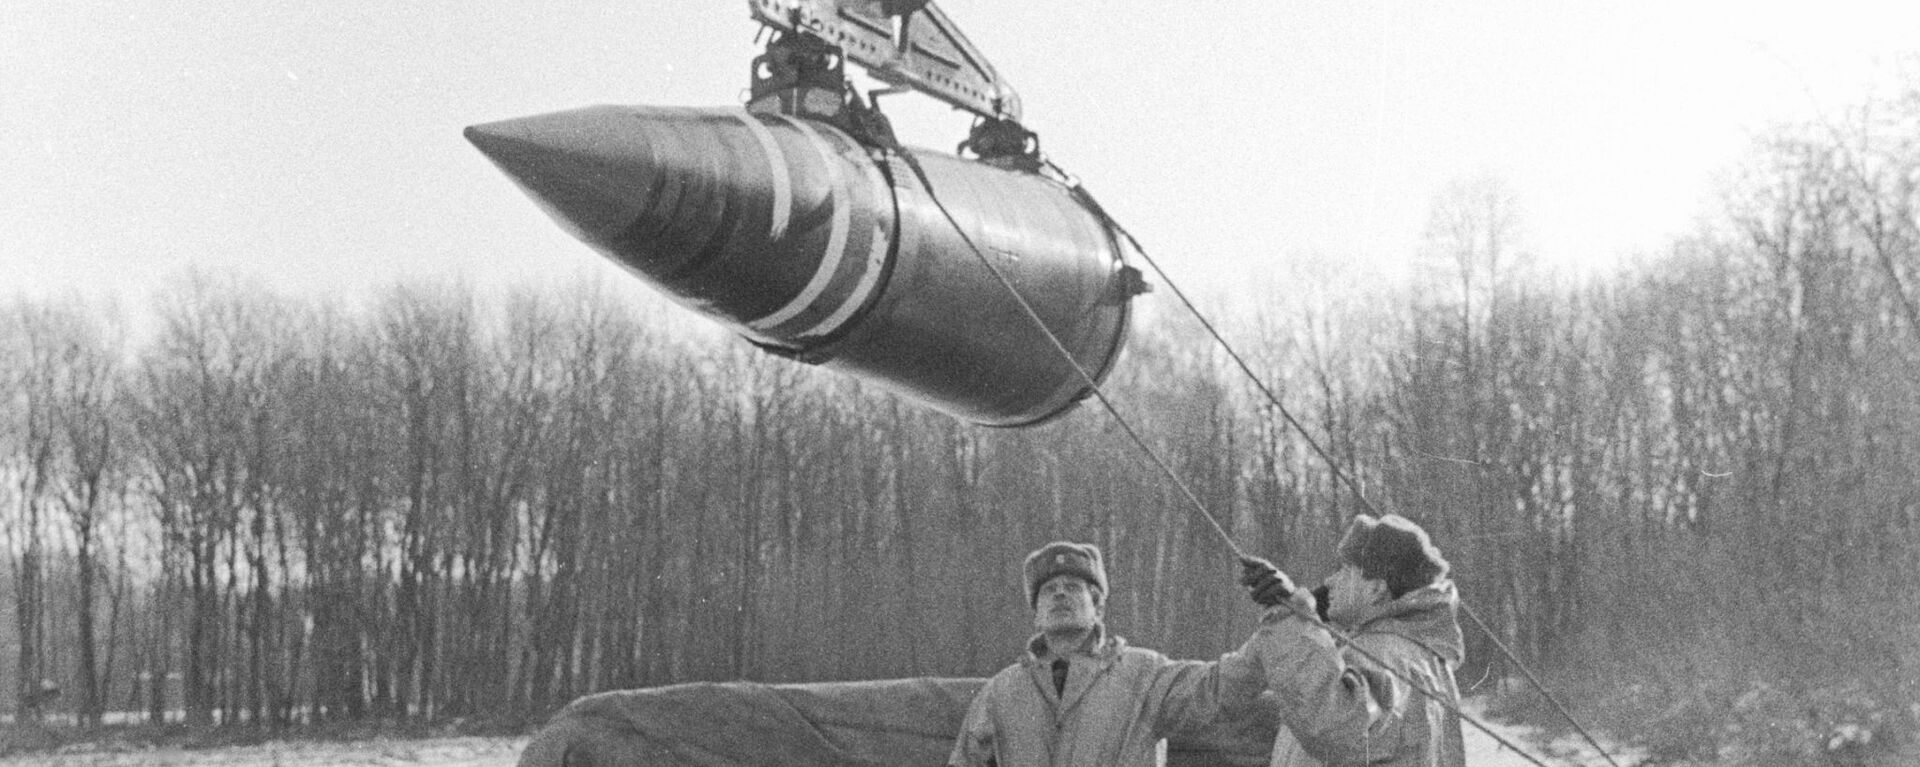 Troops load up nuclear warheads on Ukrainian territory. 1992. - Sputnik International, 1920, 15.04.2021